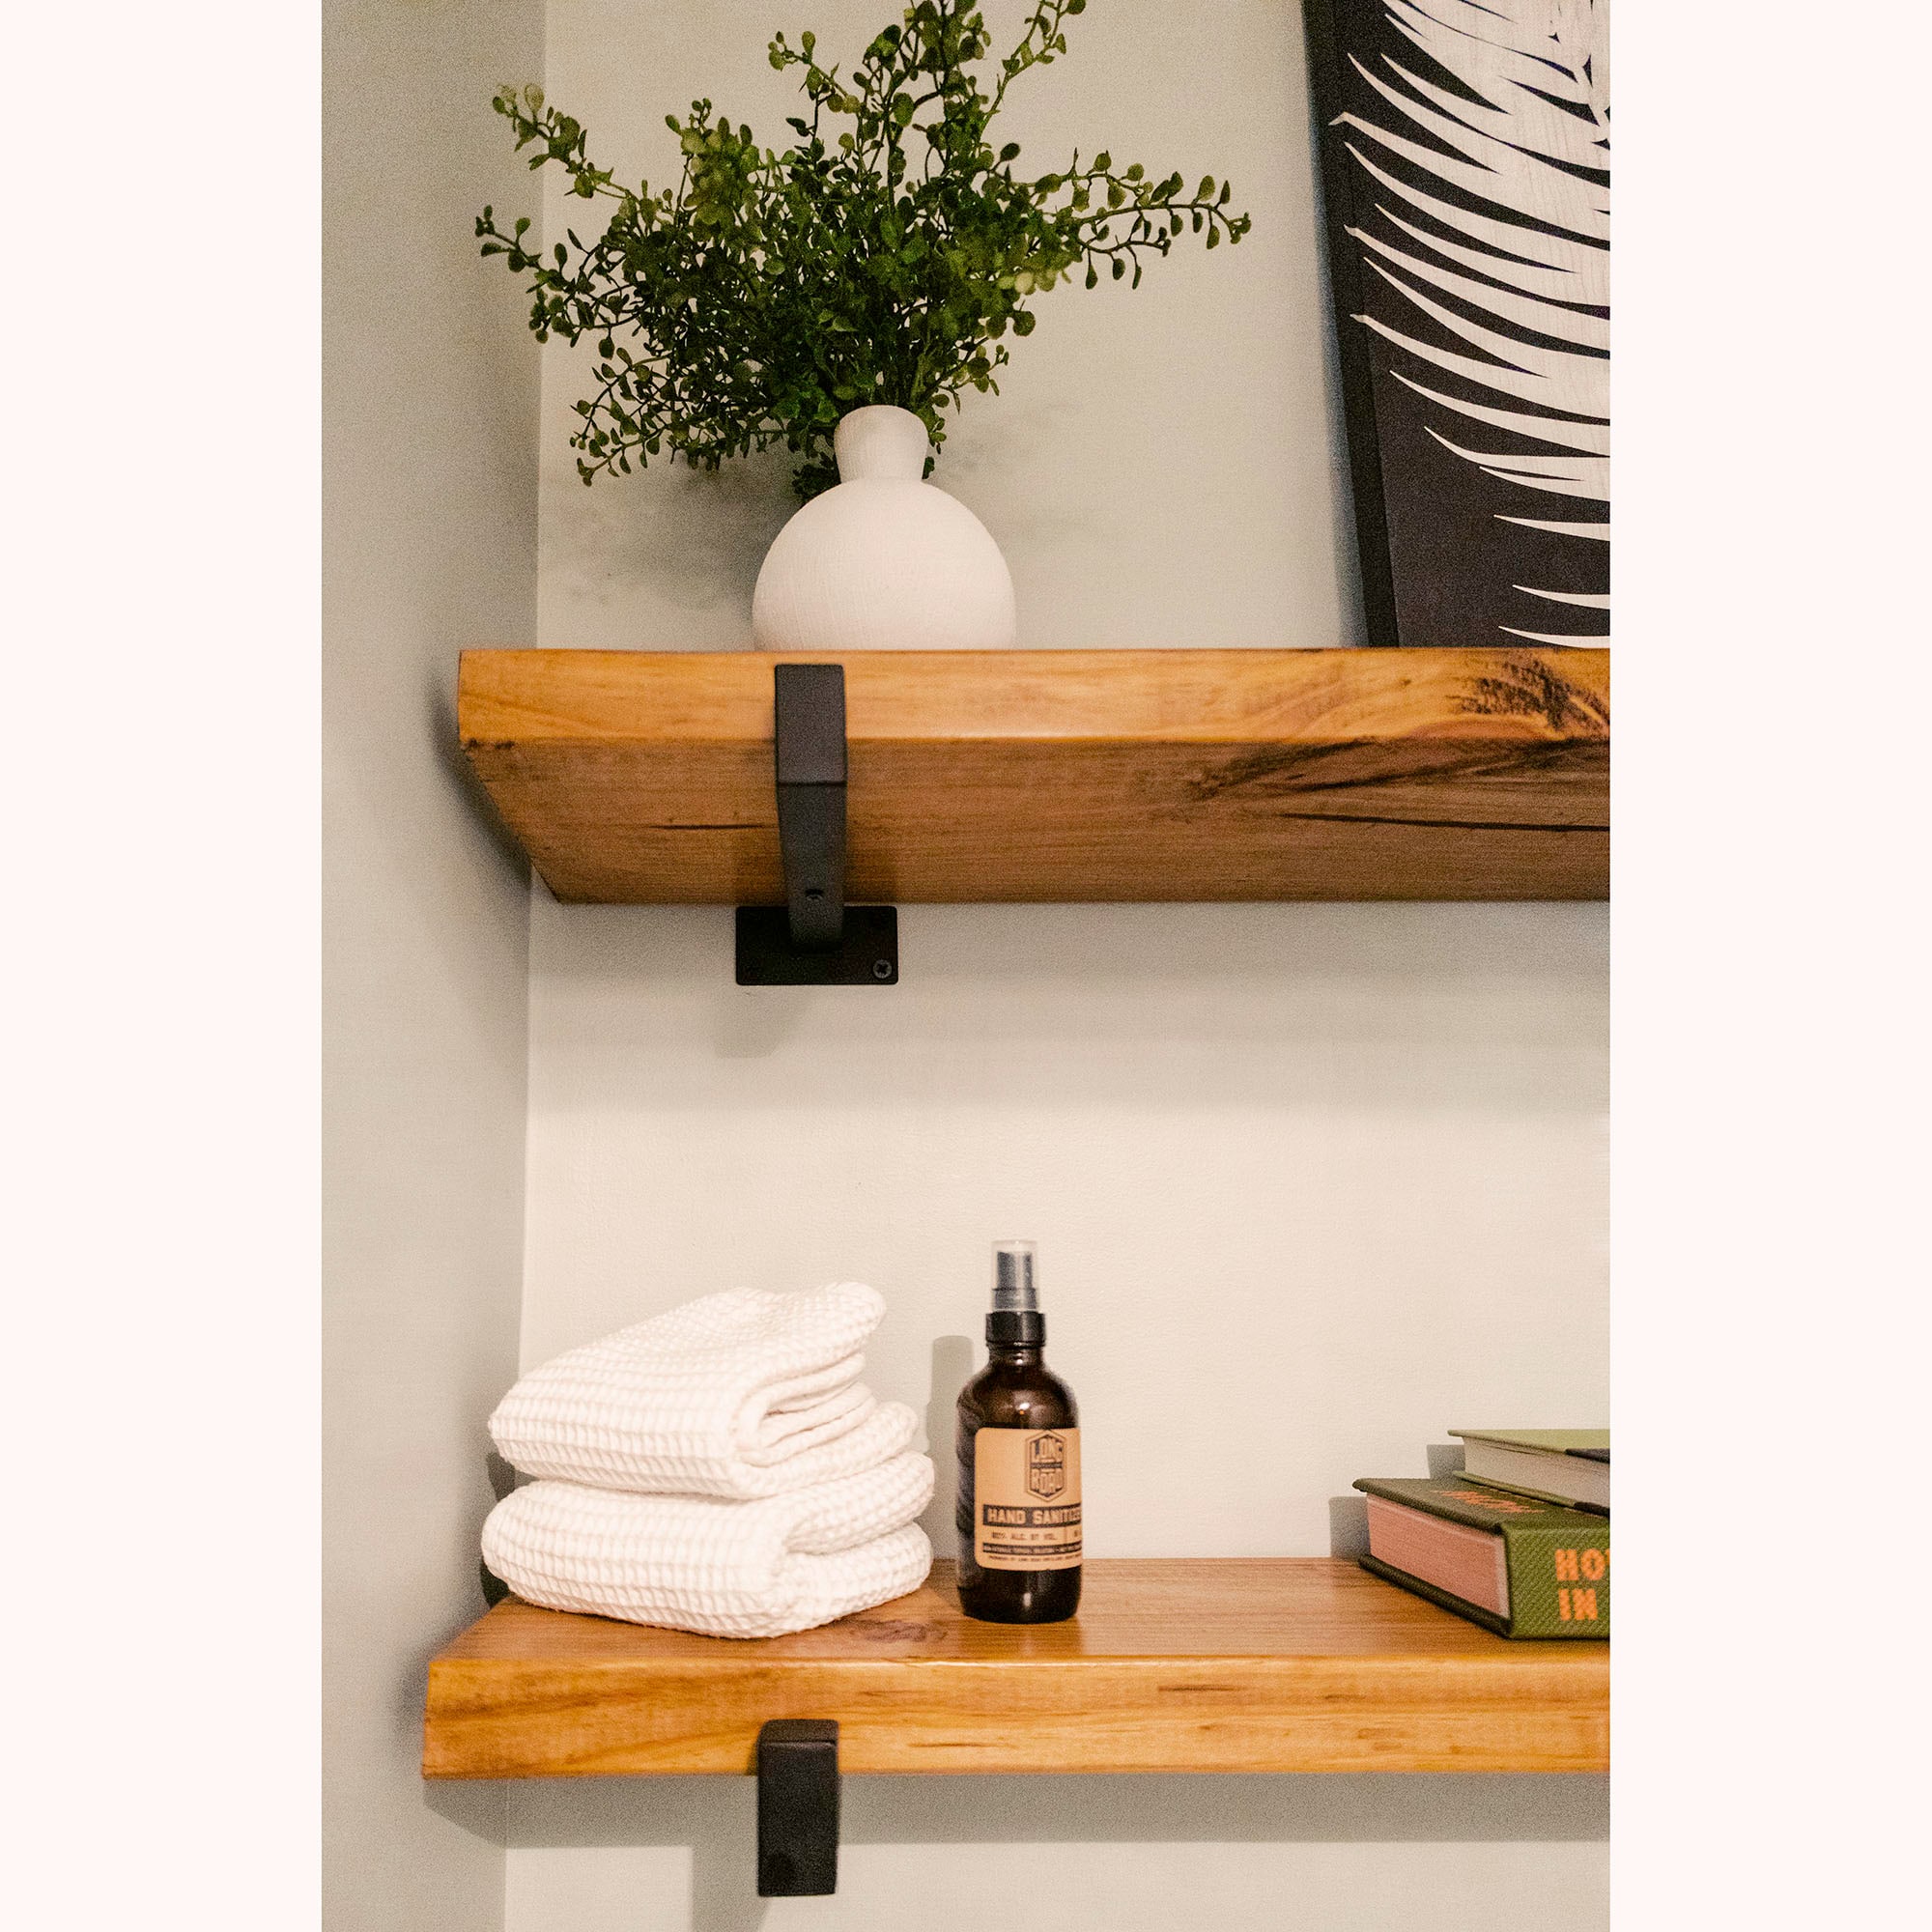 raw wood shelves